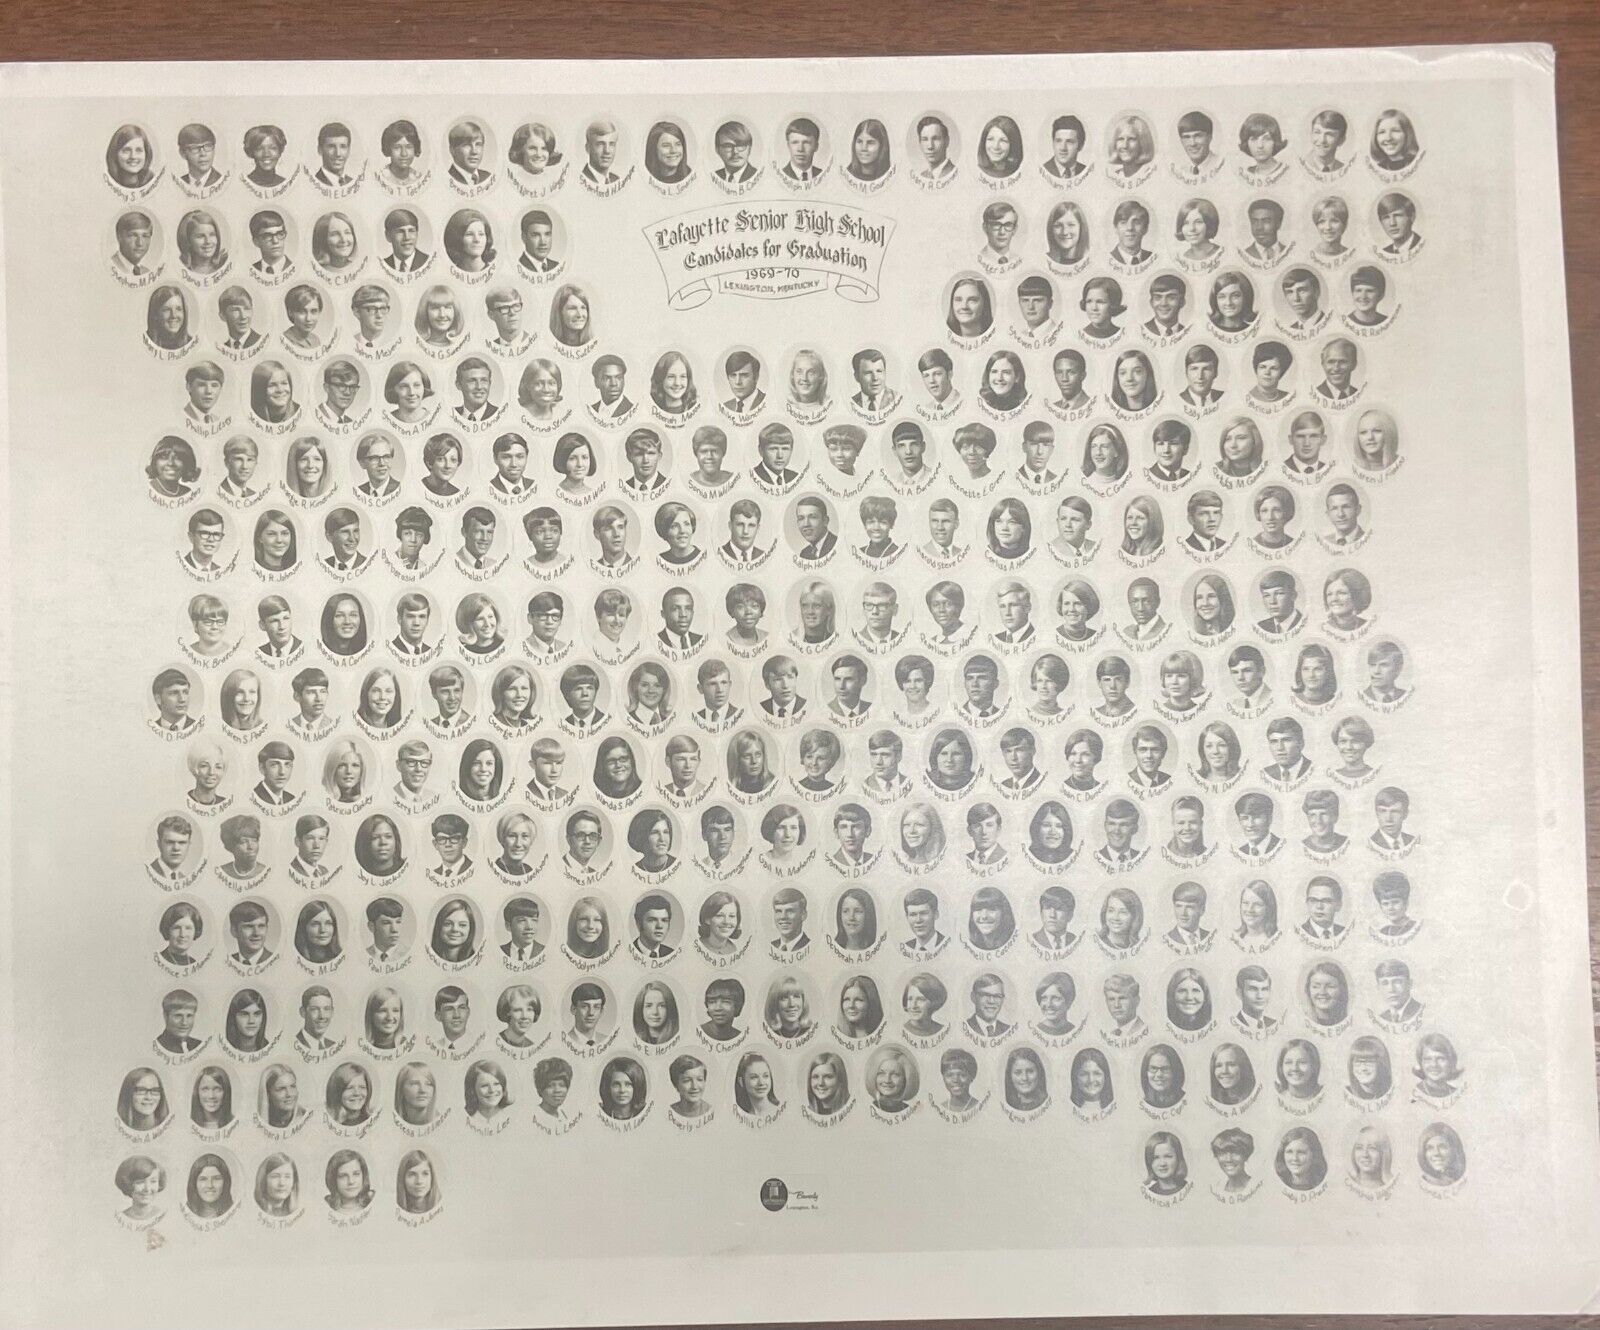 Lafayette Senior High School 1969-70 Class Photo - Lexington, KY (2 Photos)